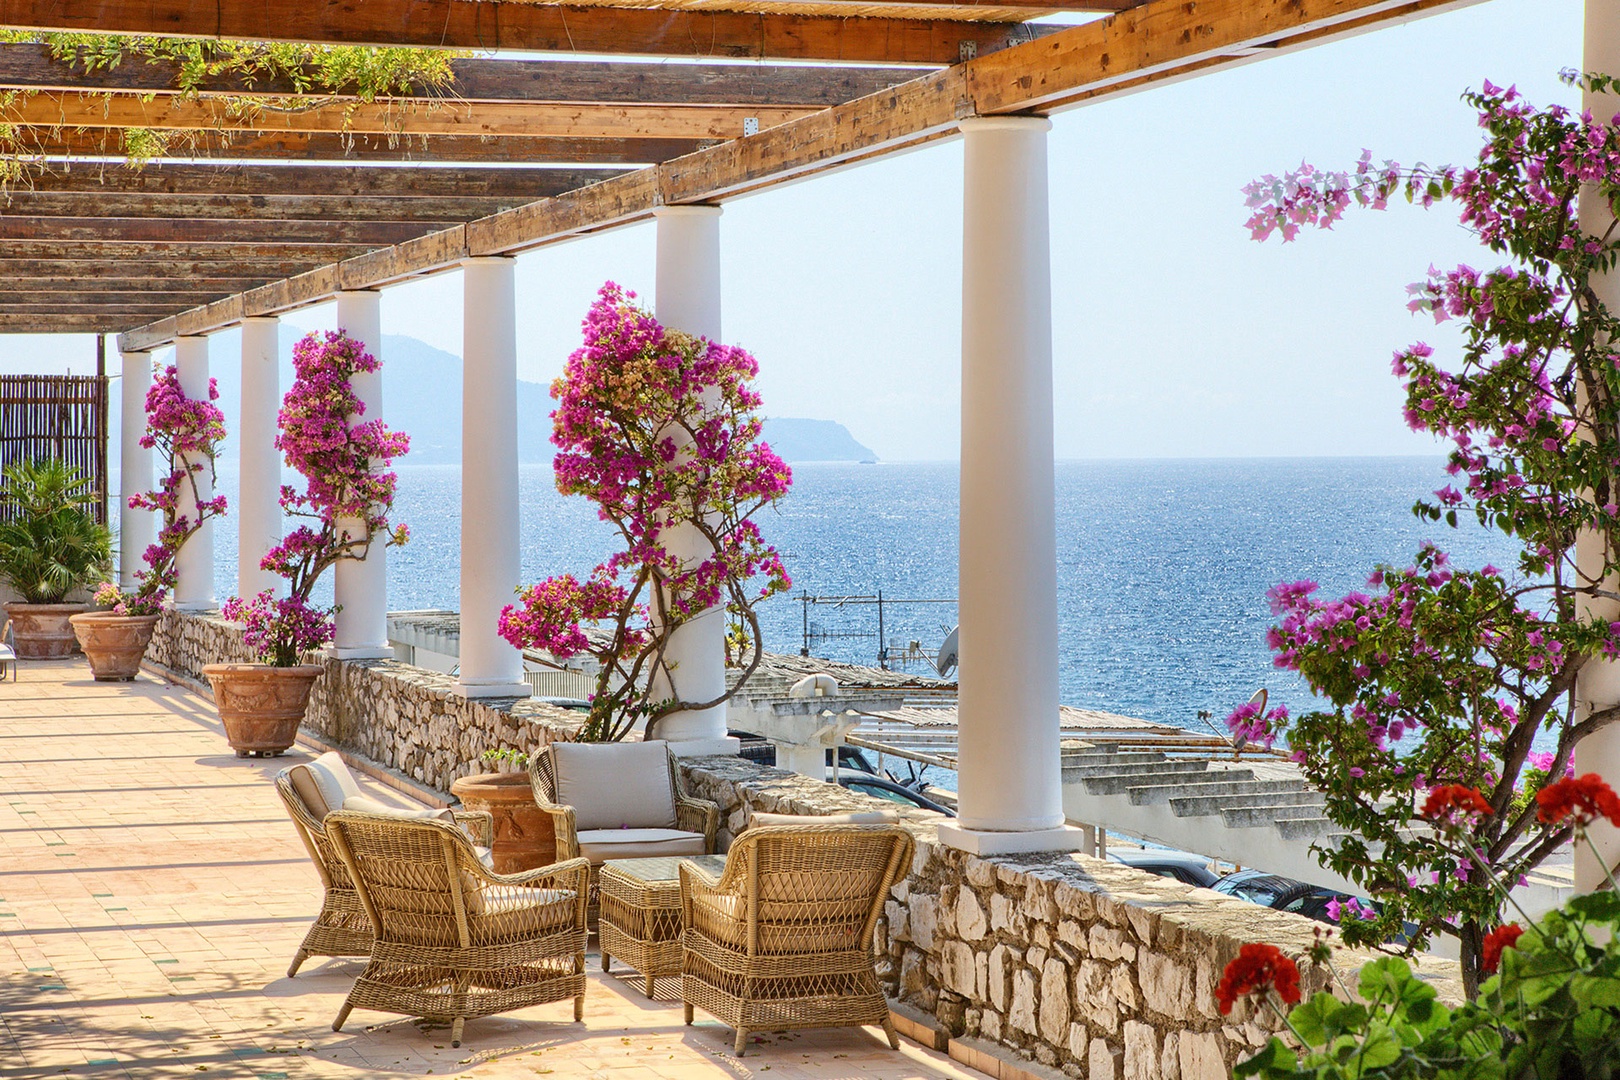 The large terrace of Villa Mare overlooks the beautiful Mediterranean sea.